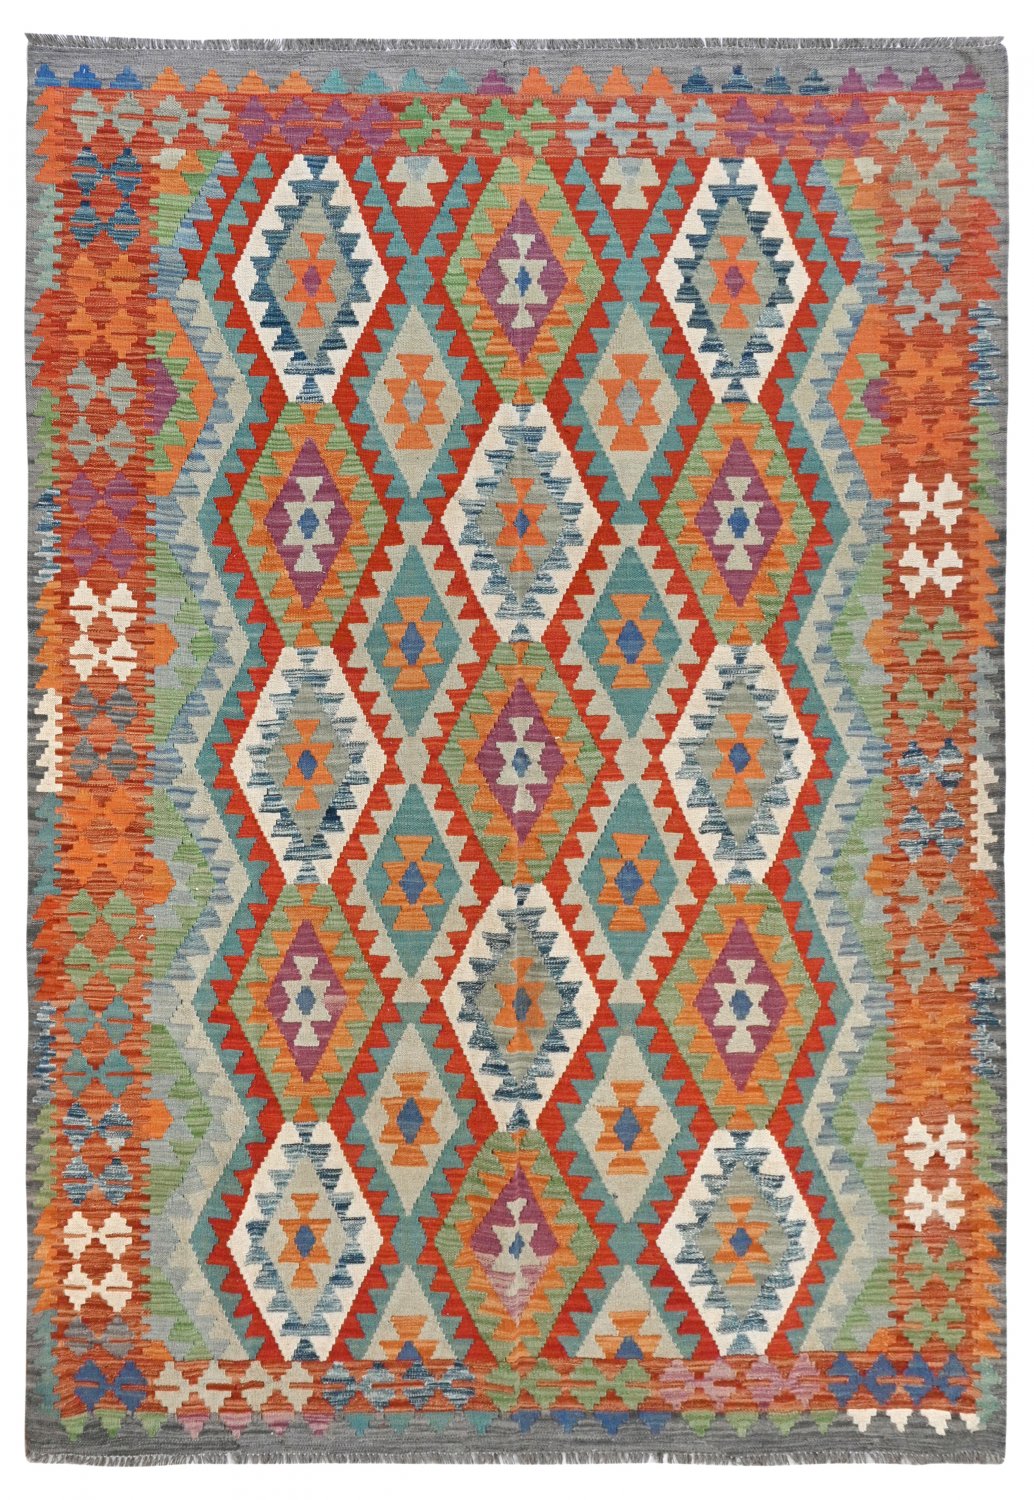 Kilim rug Afghan 294 x 201 cm